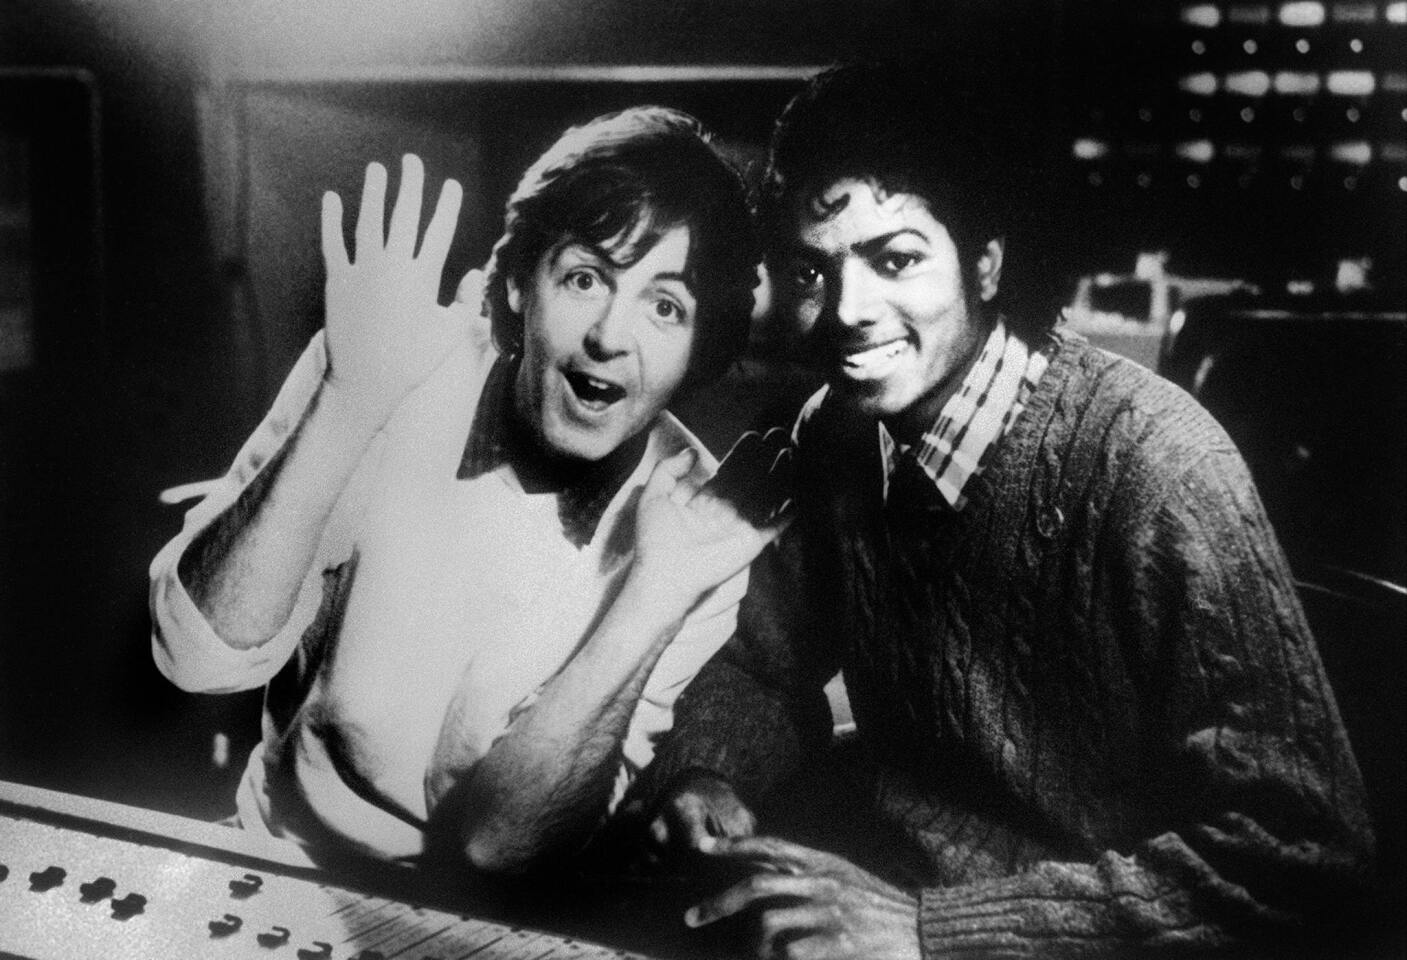 Paul McCartney and Michael Jackson: "Say Say Say" and "The Girl is Mine"